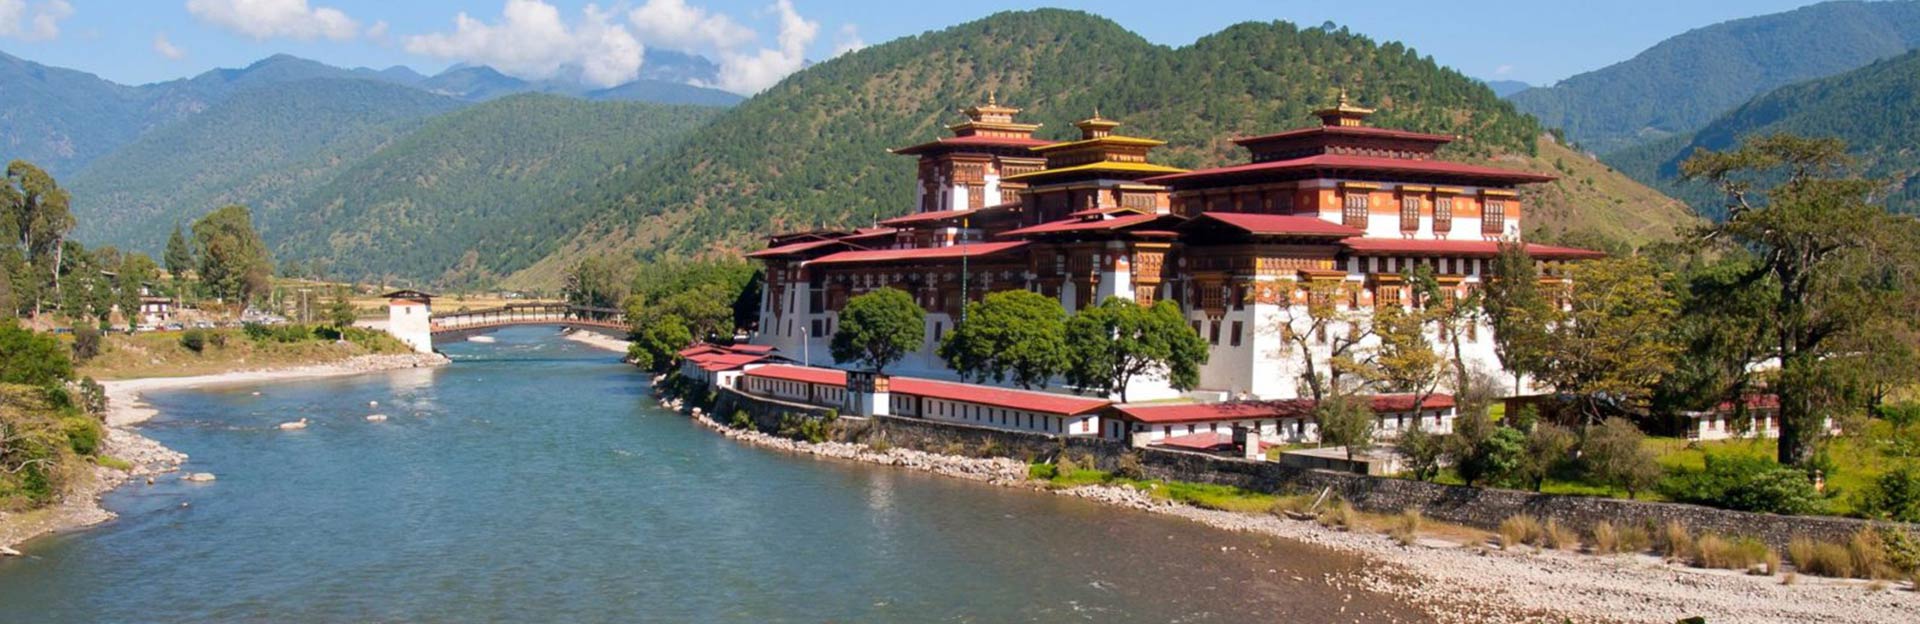 bhutan tibet tour